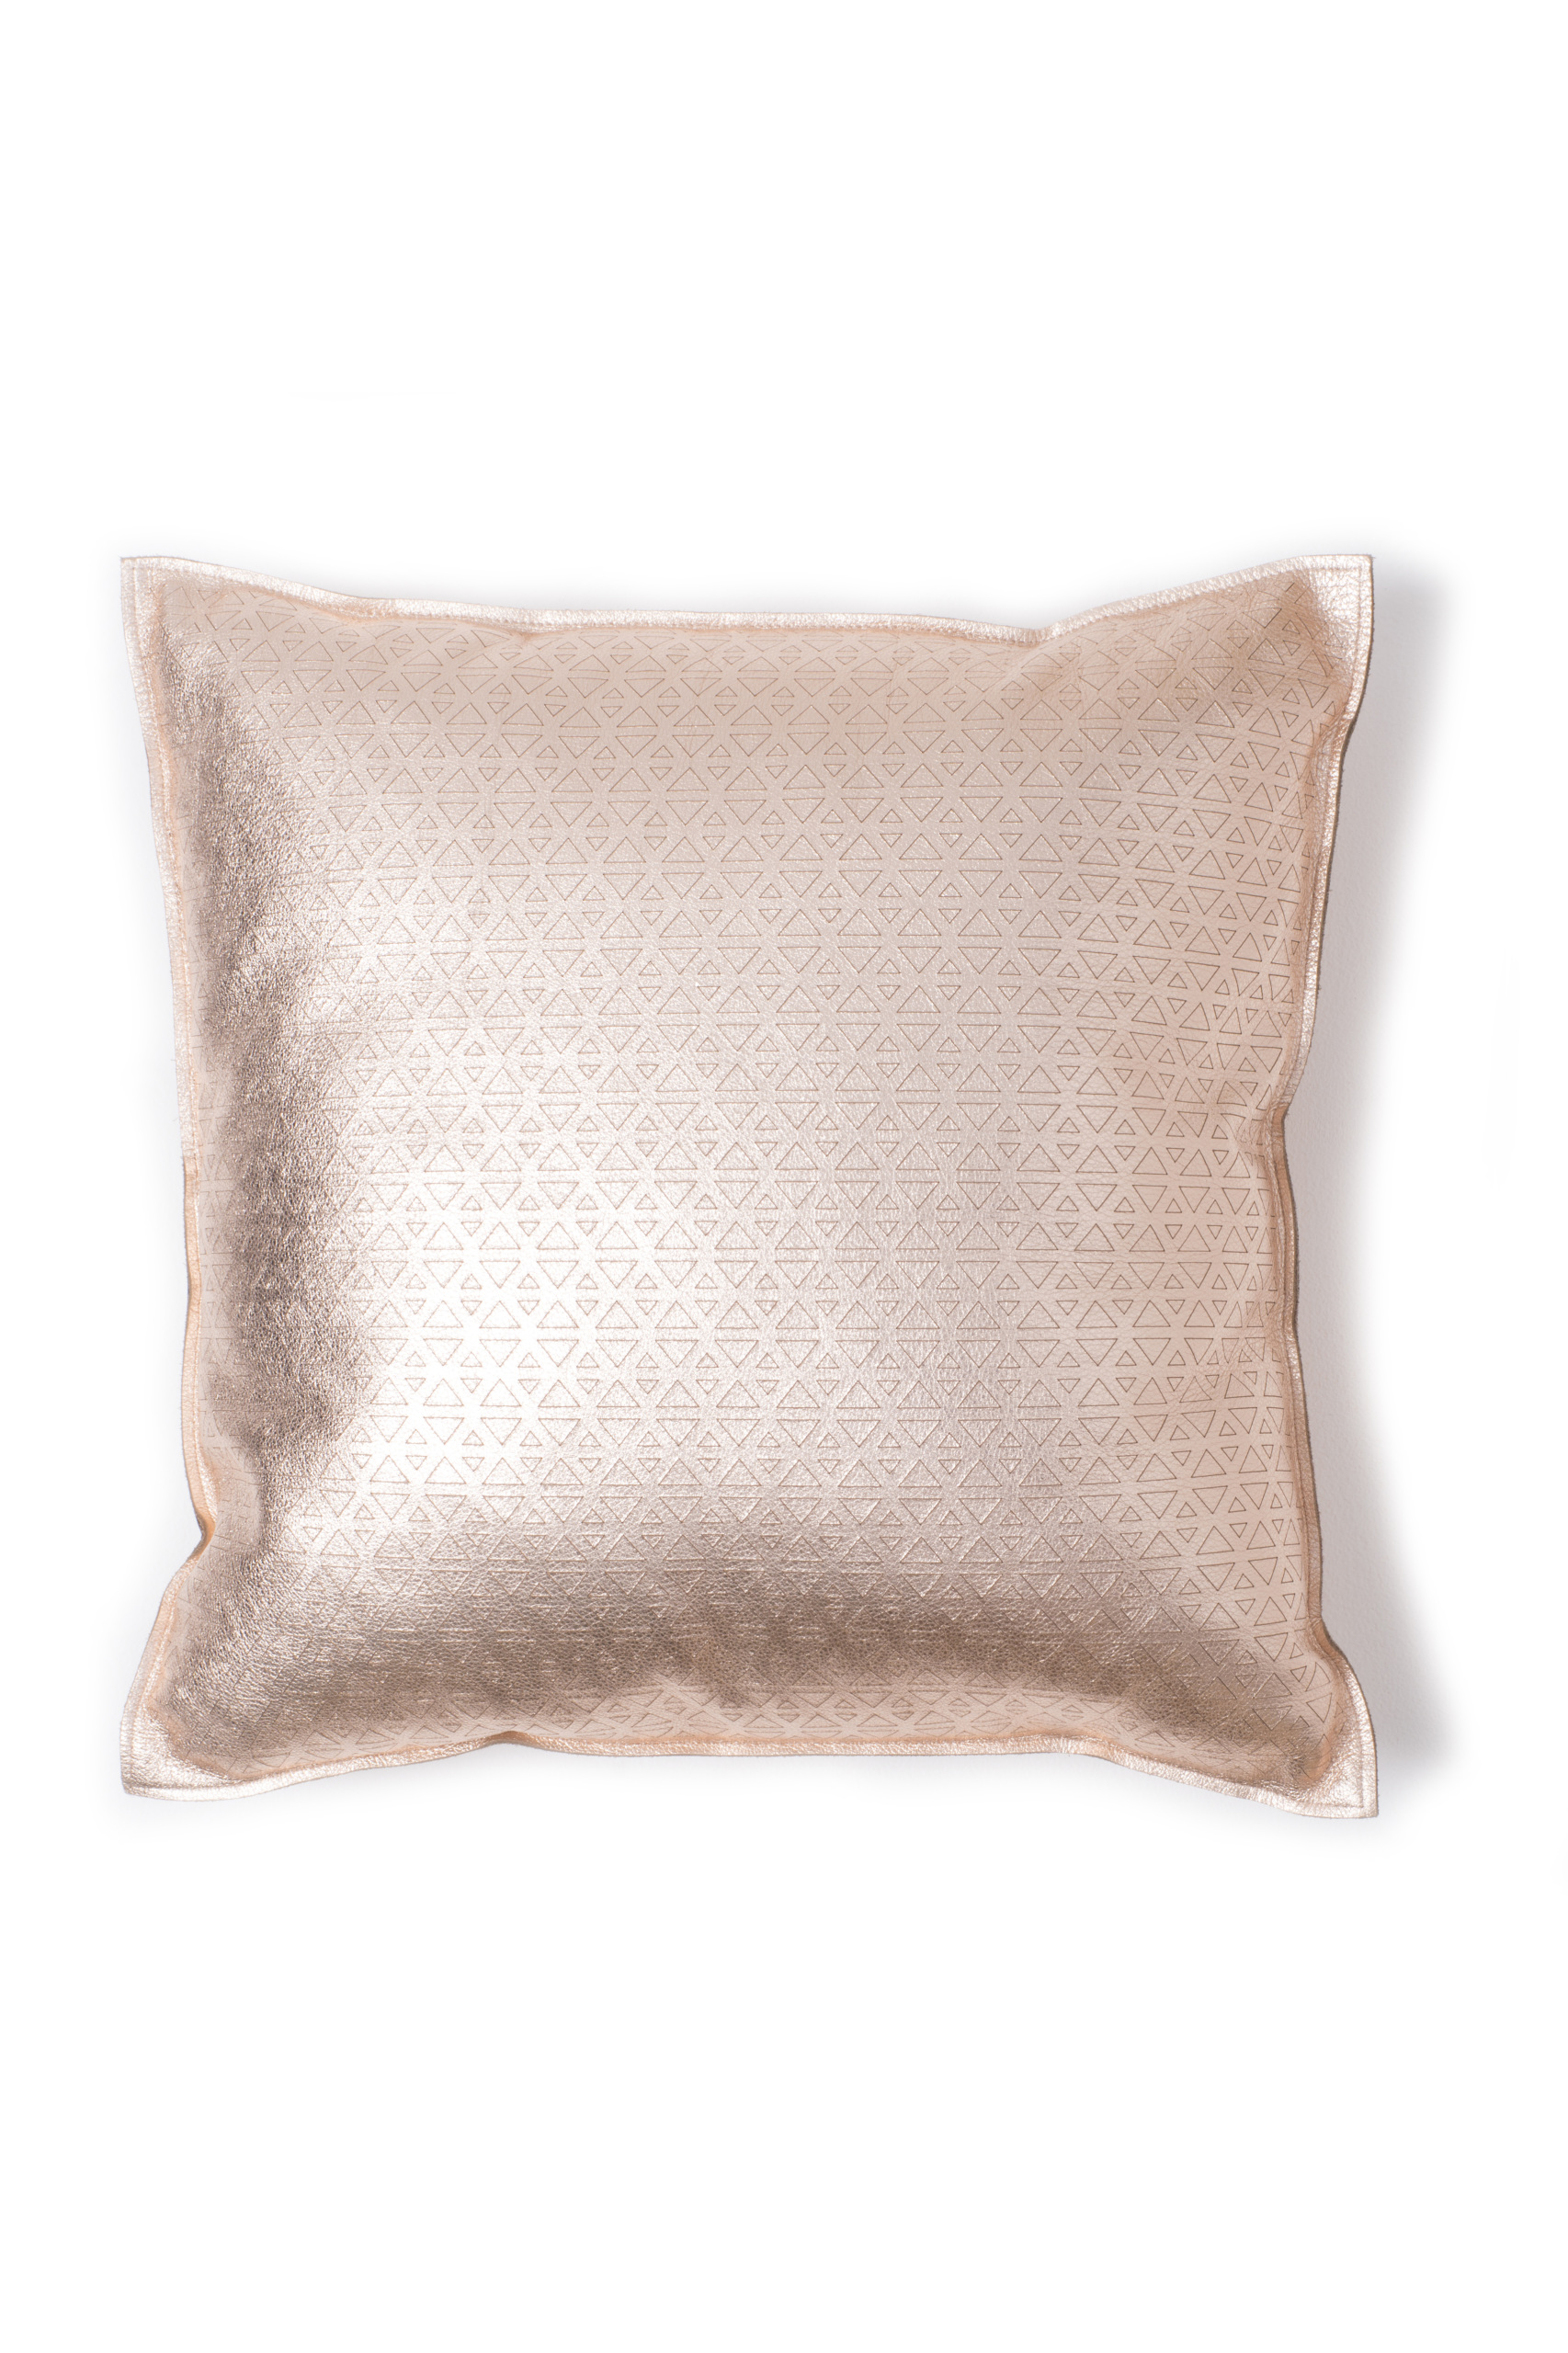 rose gold pillows primark